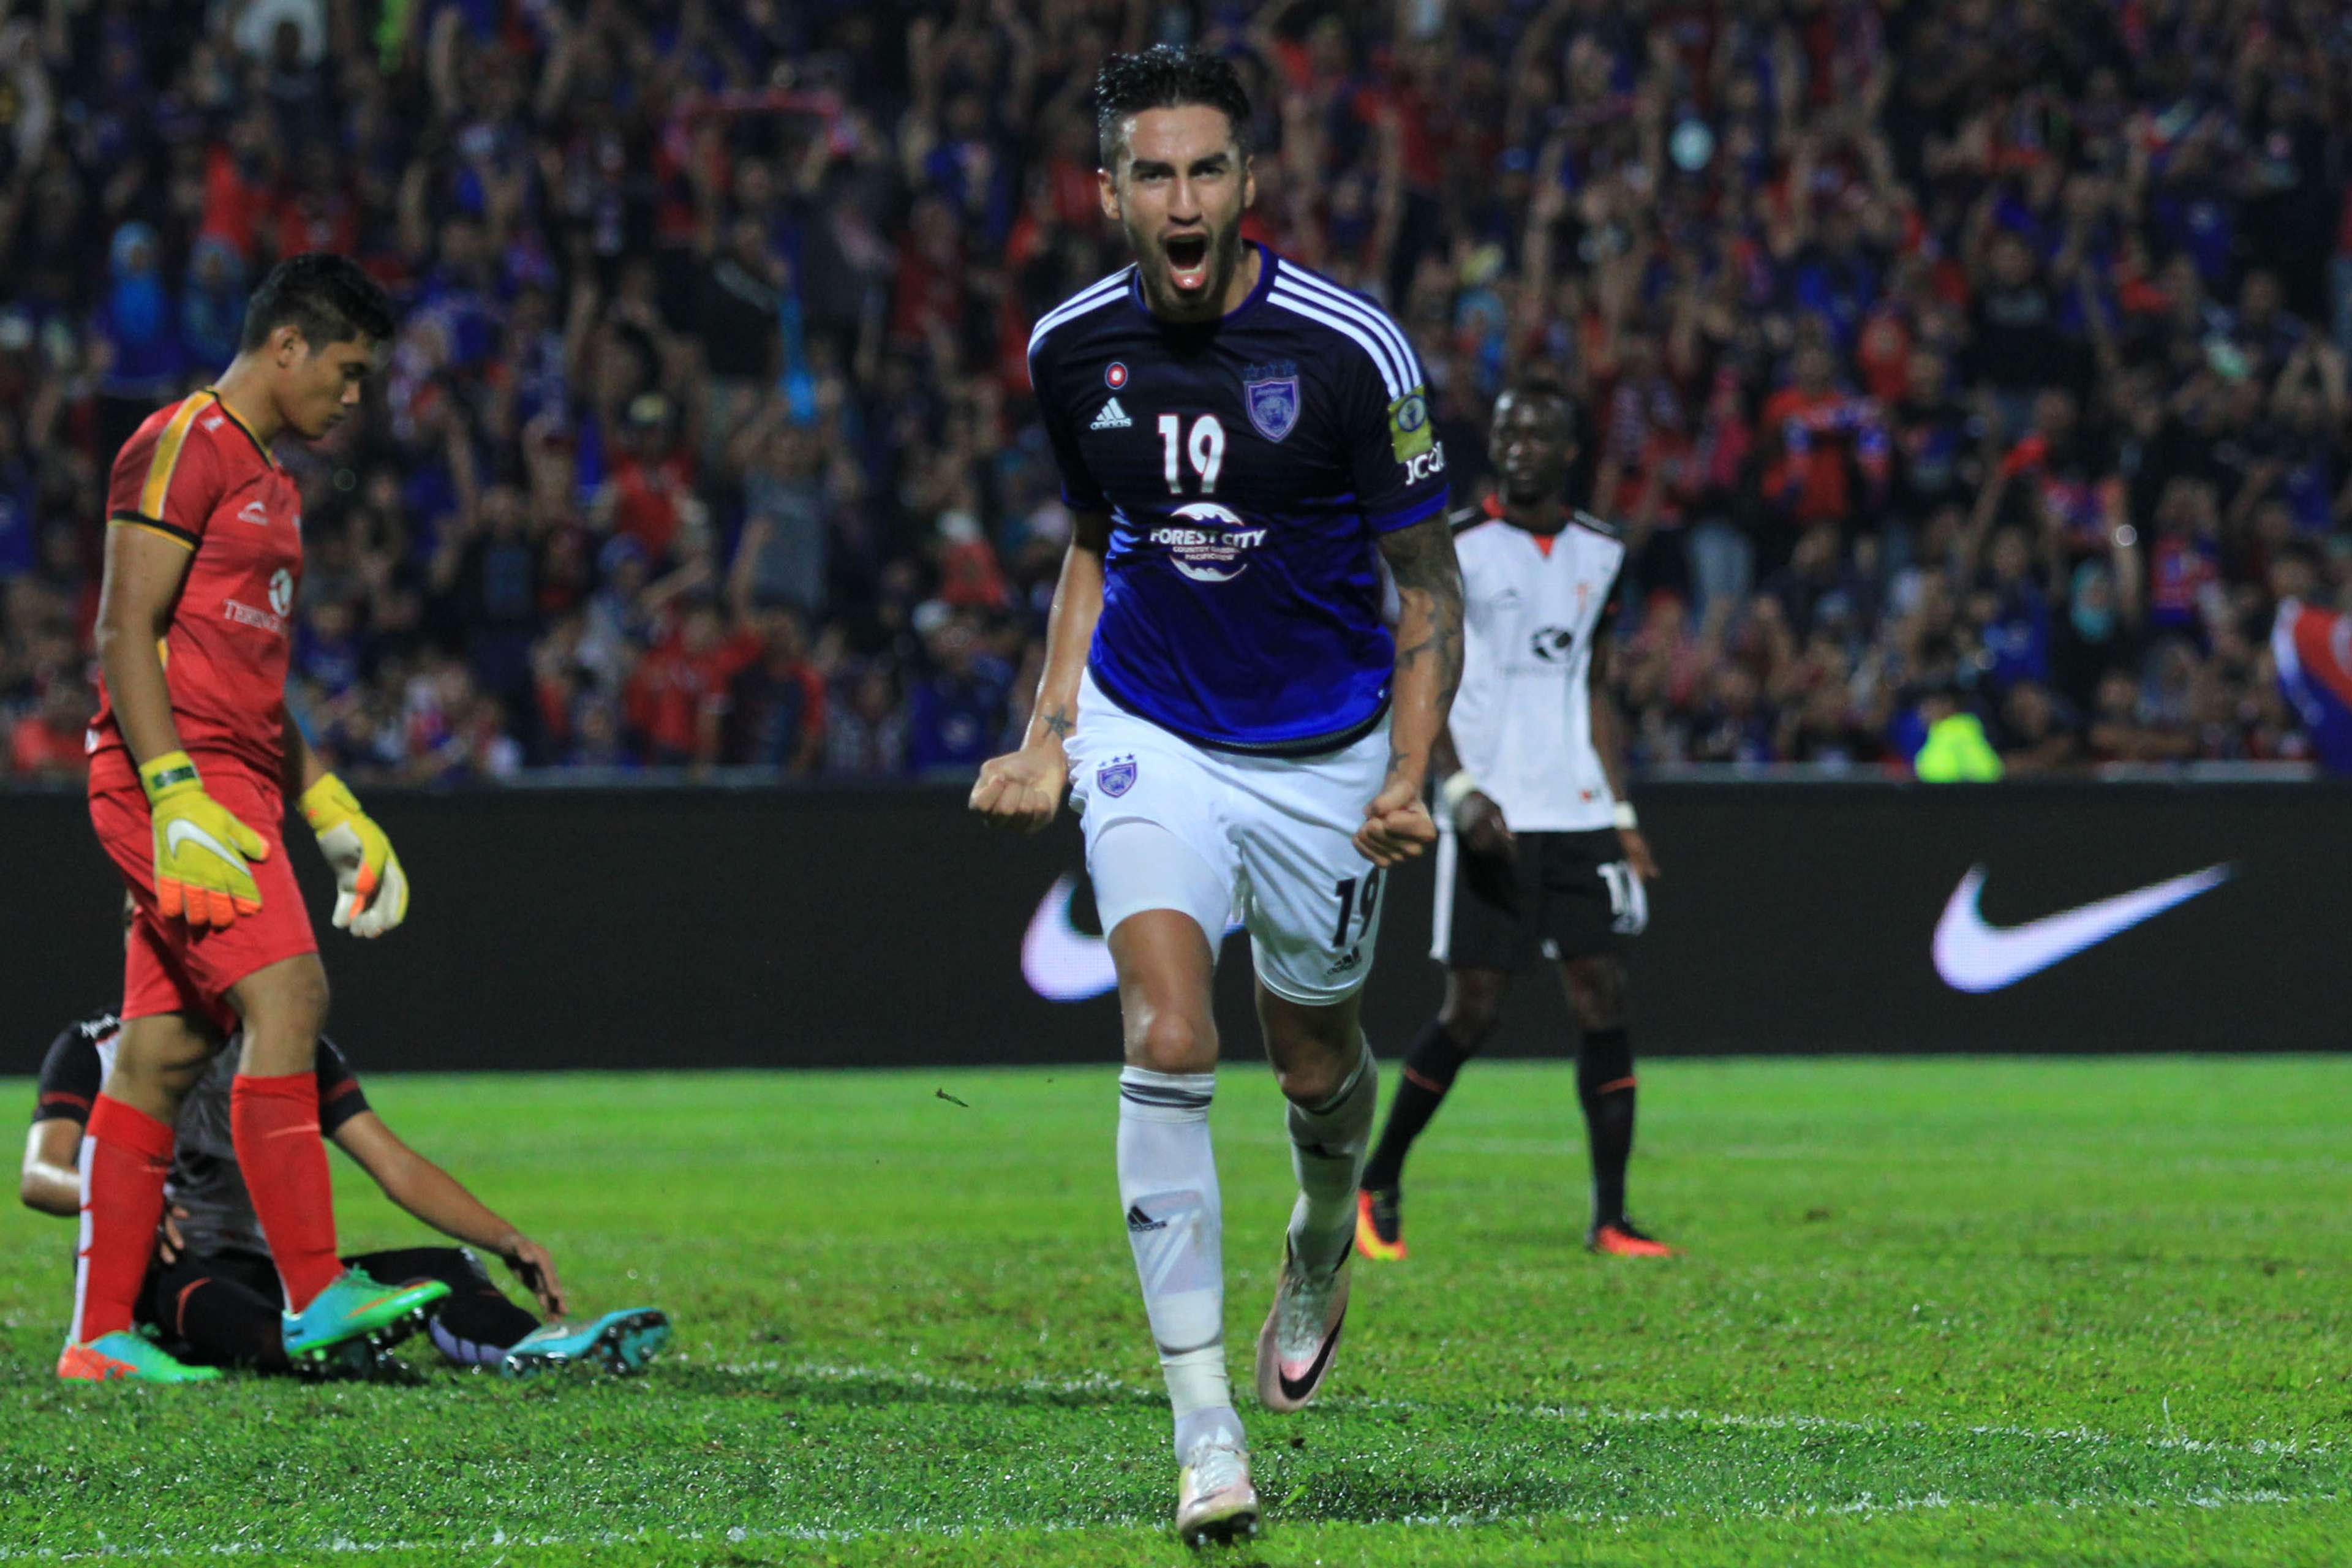 Martin Lucero after scoring his hattrick goal for Johor Darul Ta'zim